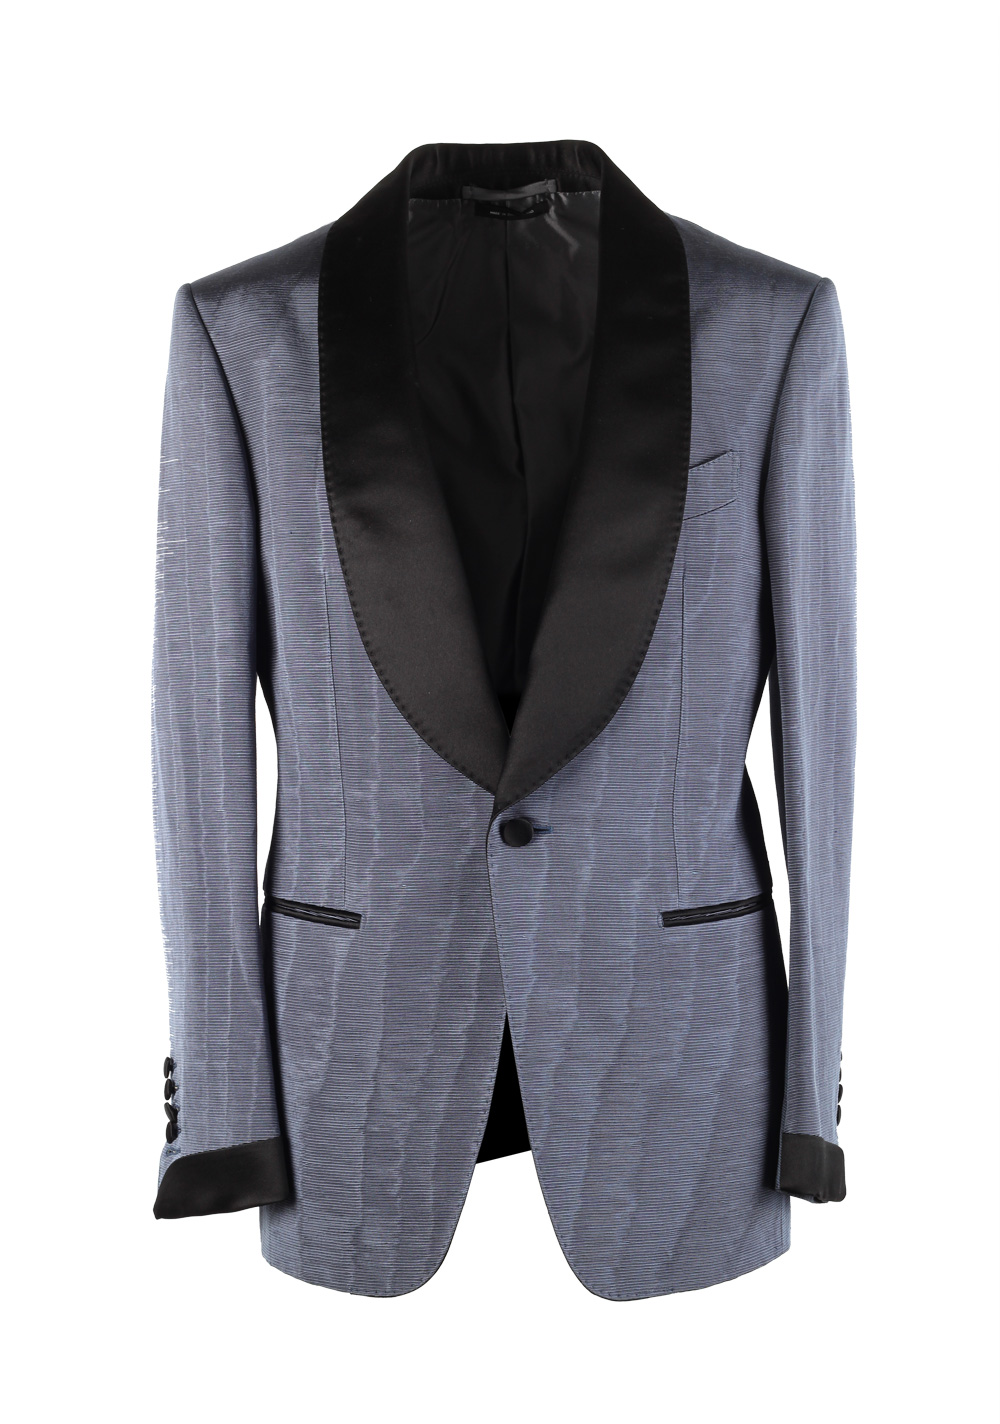 TOM FORD Shelton Blue Tuxedo Dinner Jacket Size 46 / 36R U.S. | Costume ...